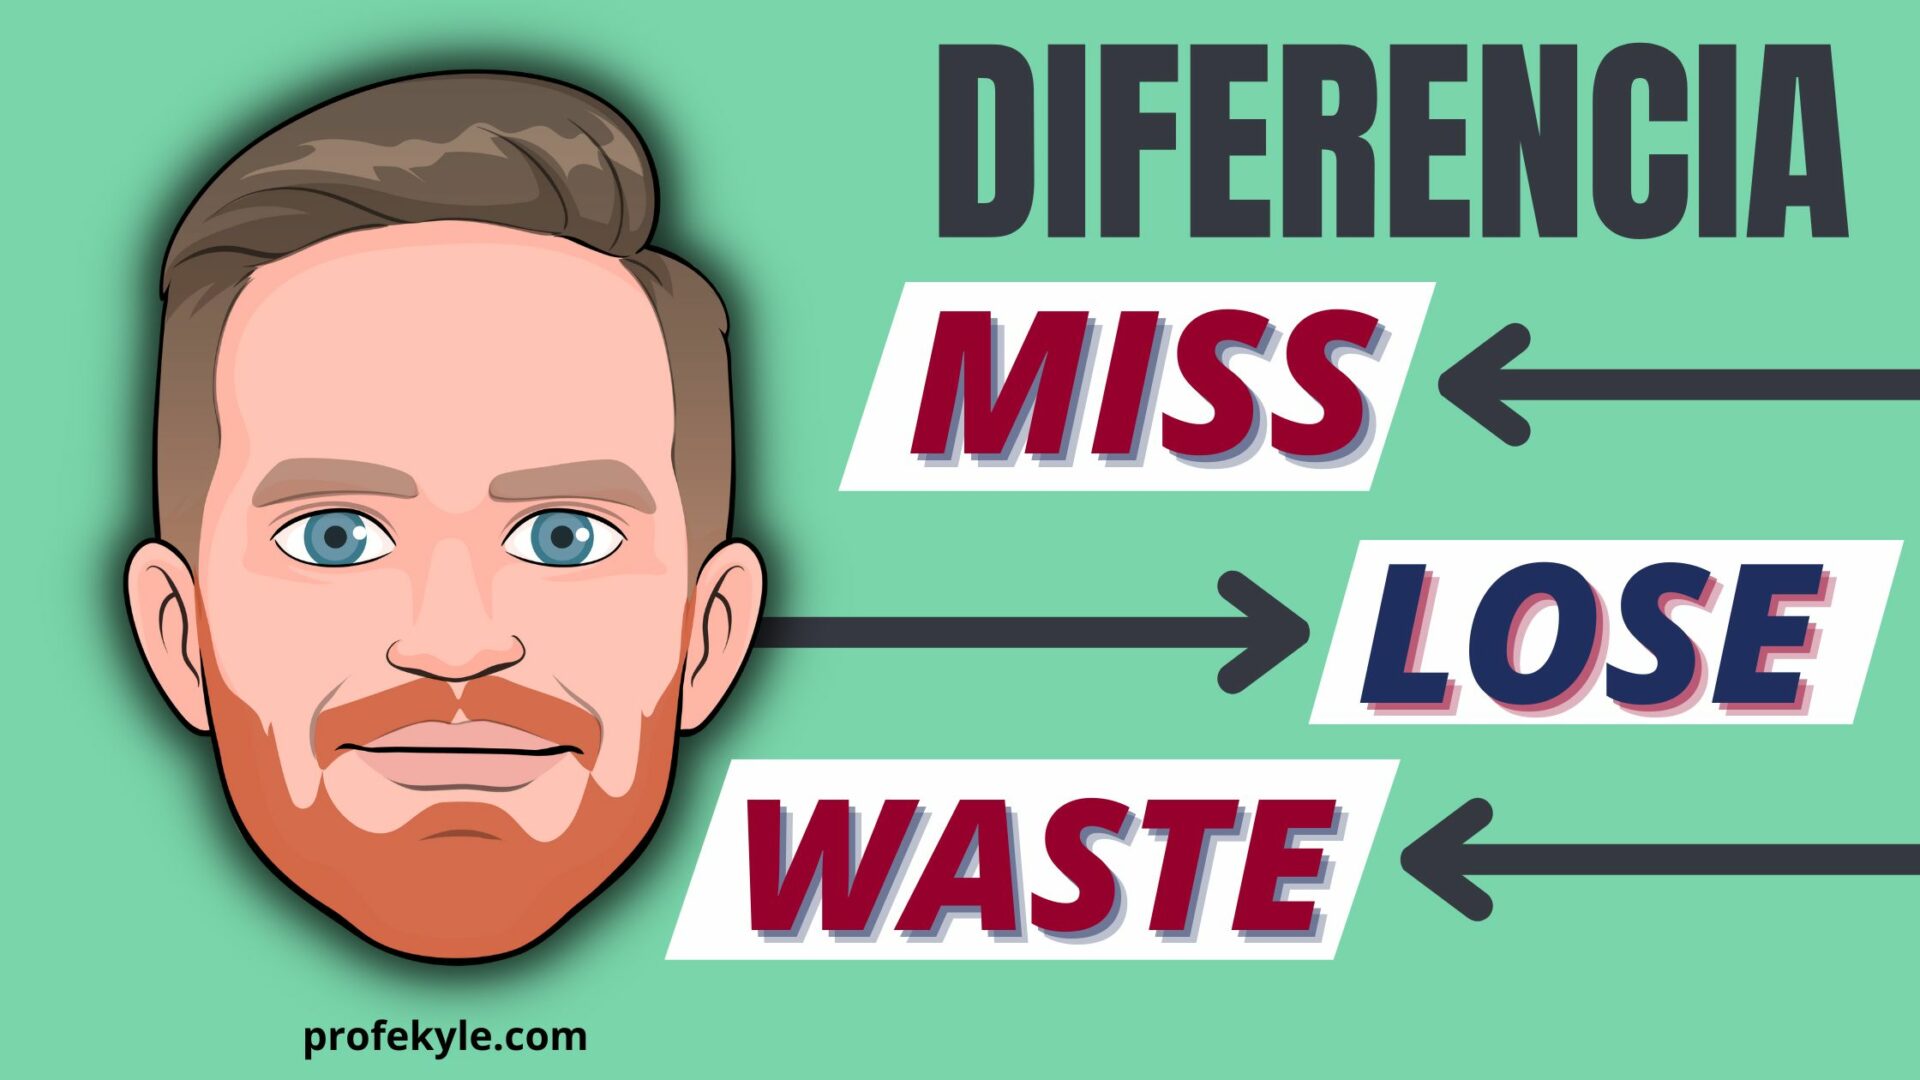 miss lose waste diferencia inglés